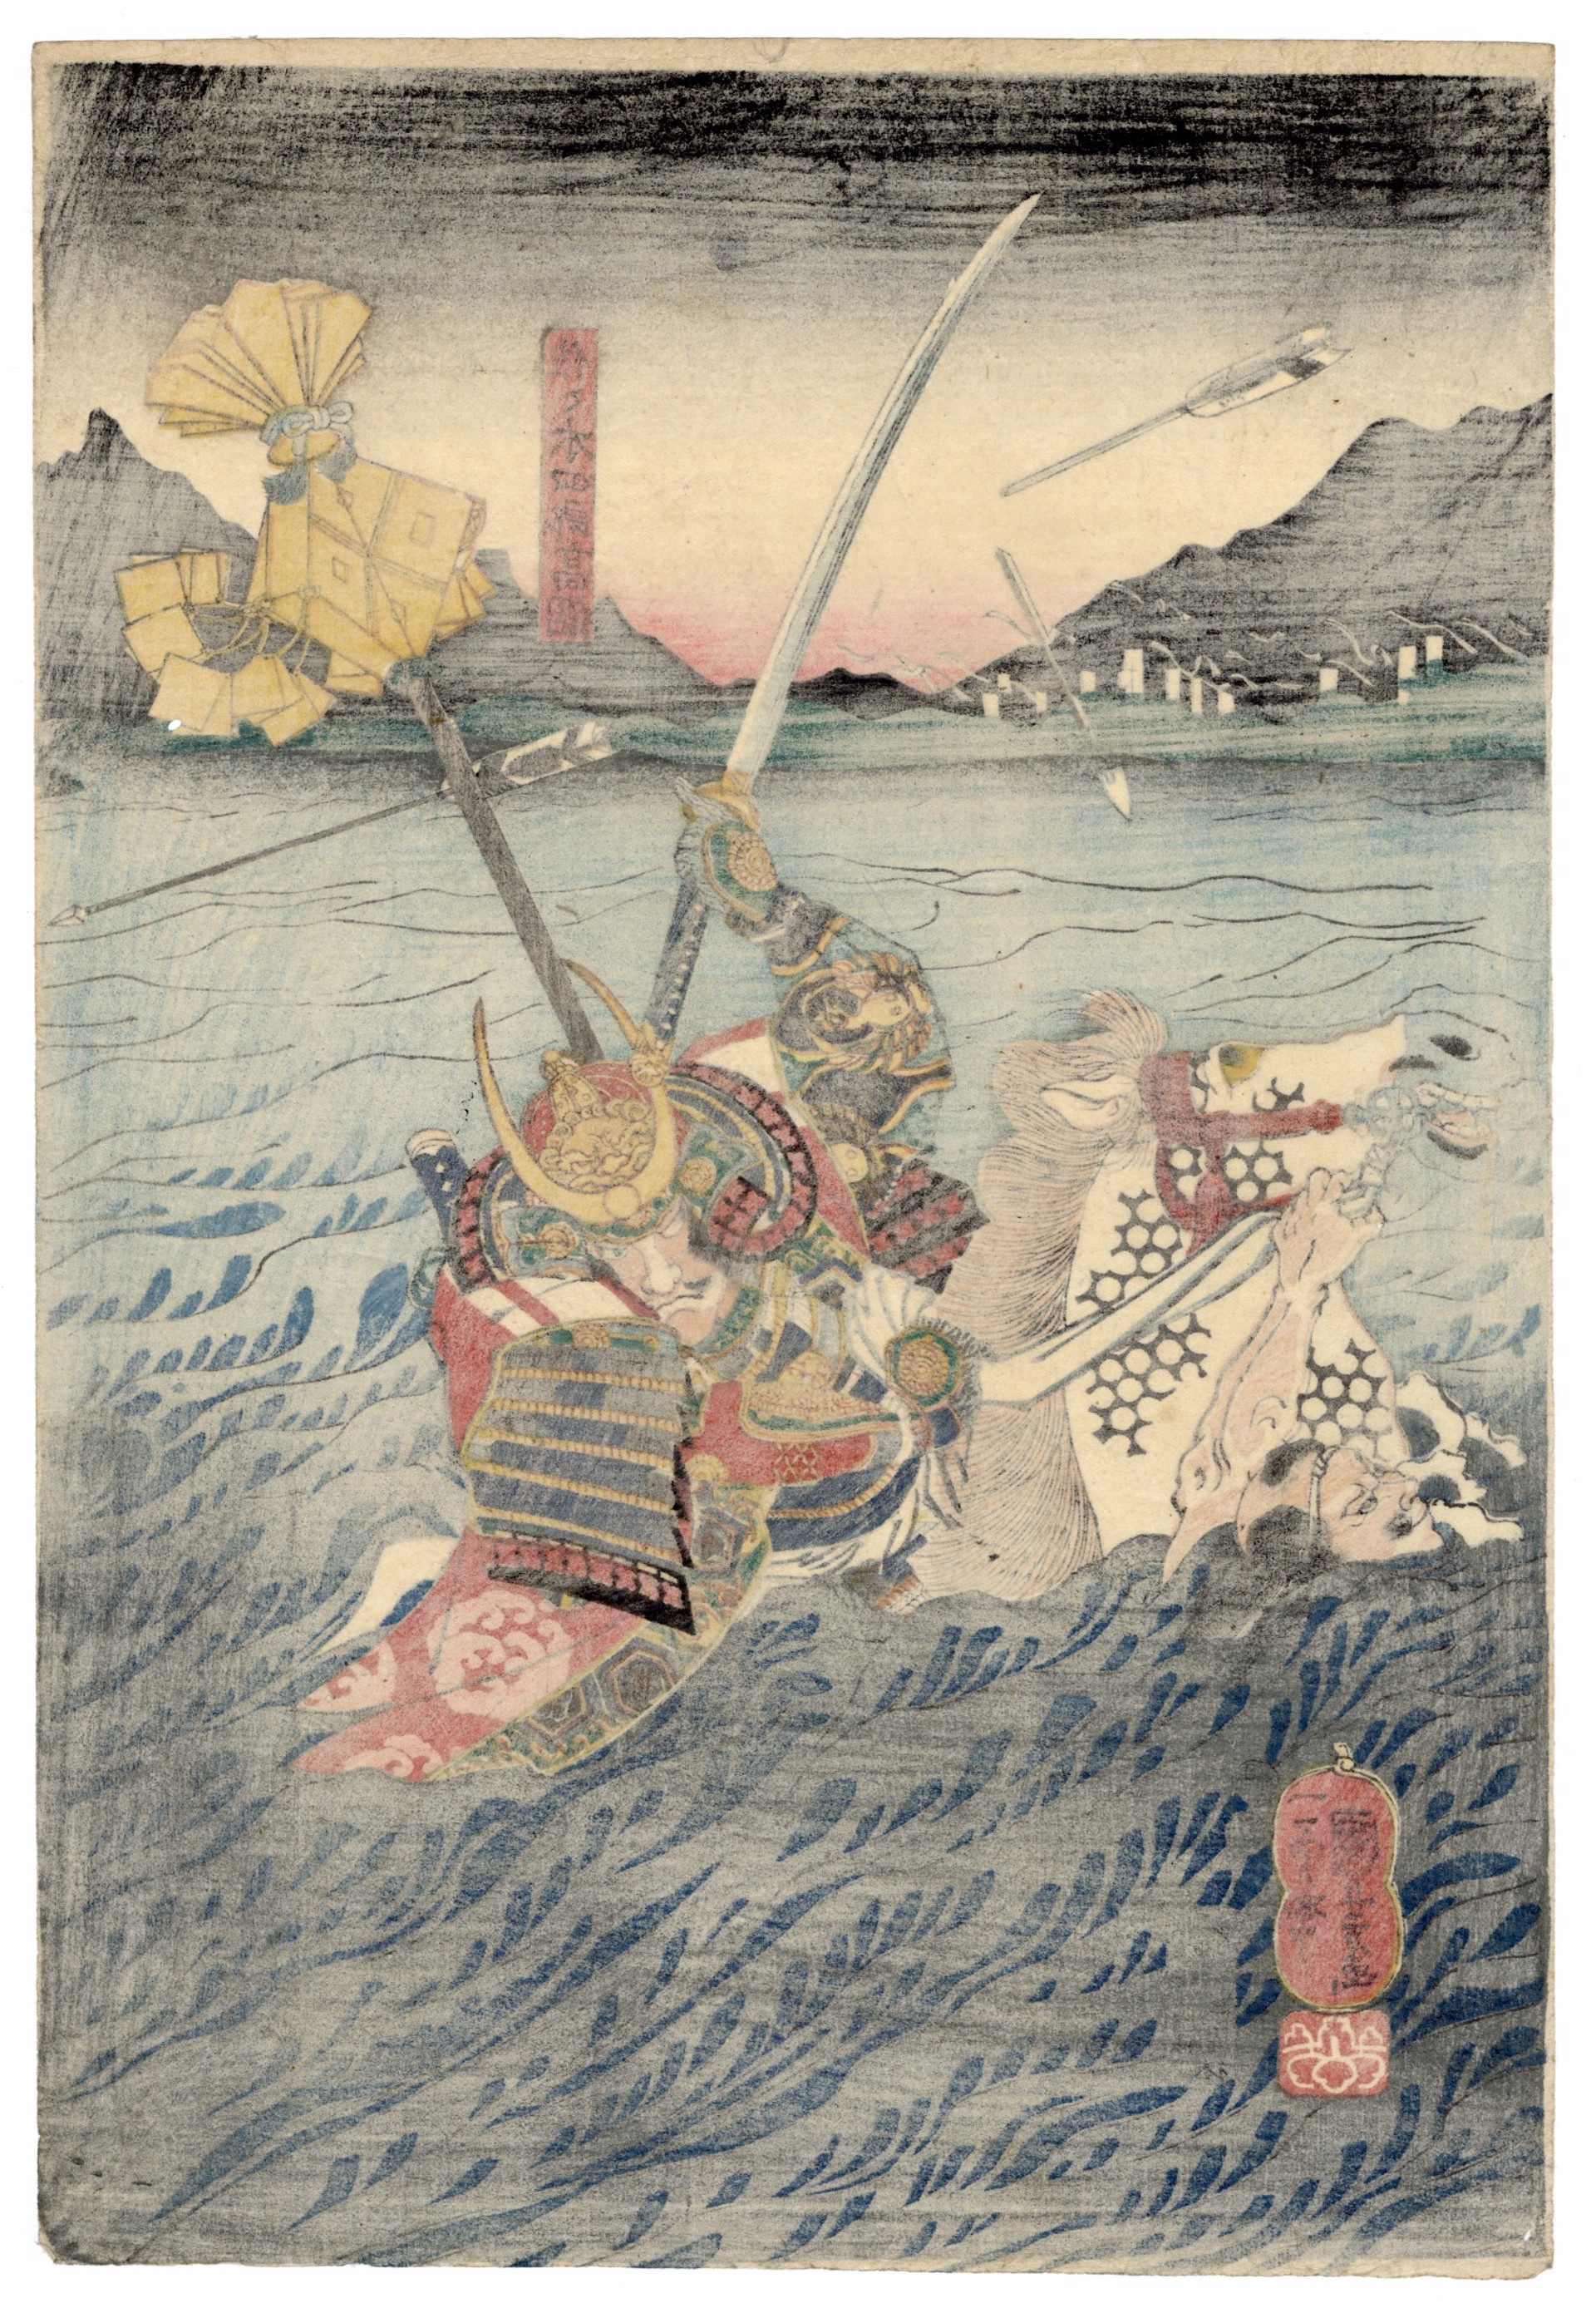 The Battle of the Uji River by Kuniyoshi